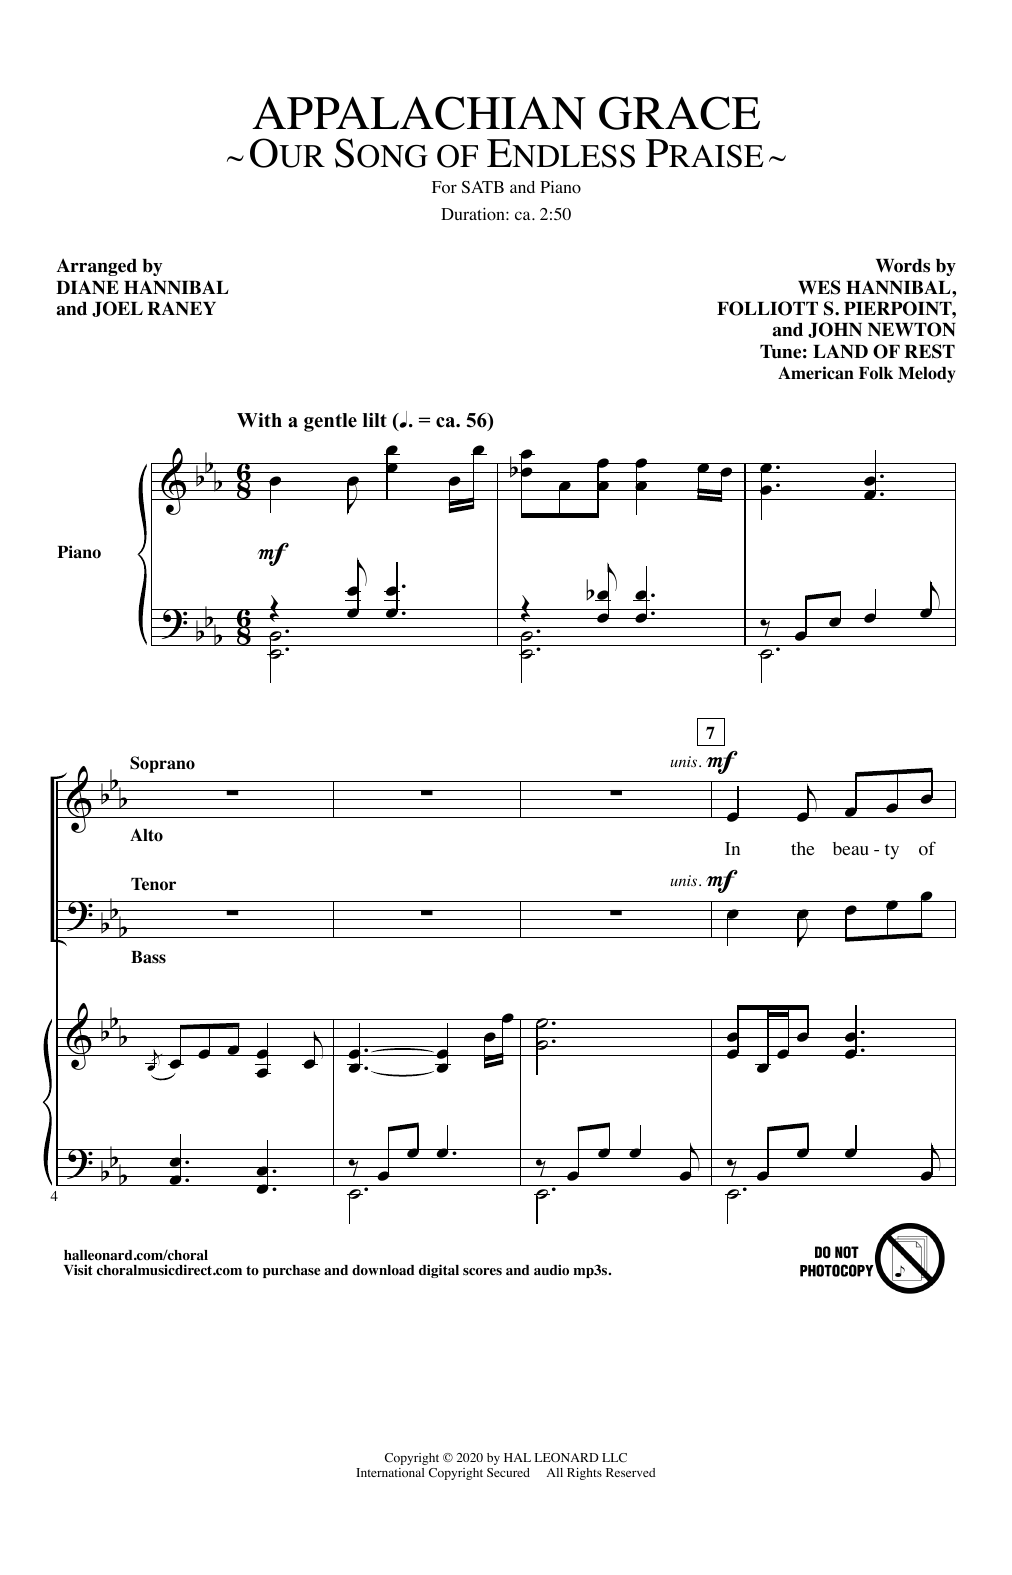 Download Wes Hannibal, Folliott S. Pierpoint Appalachian Grace (Our Song Of Endless Sheet Music